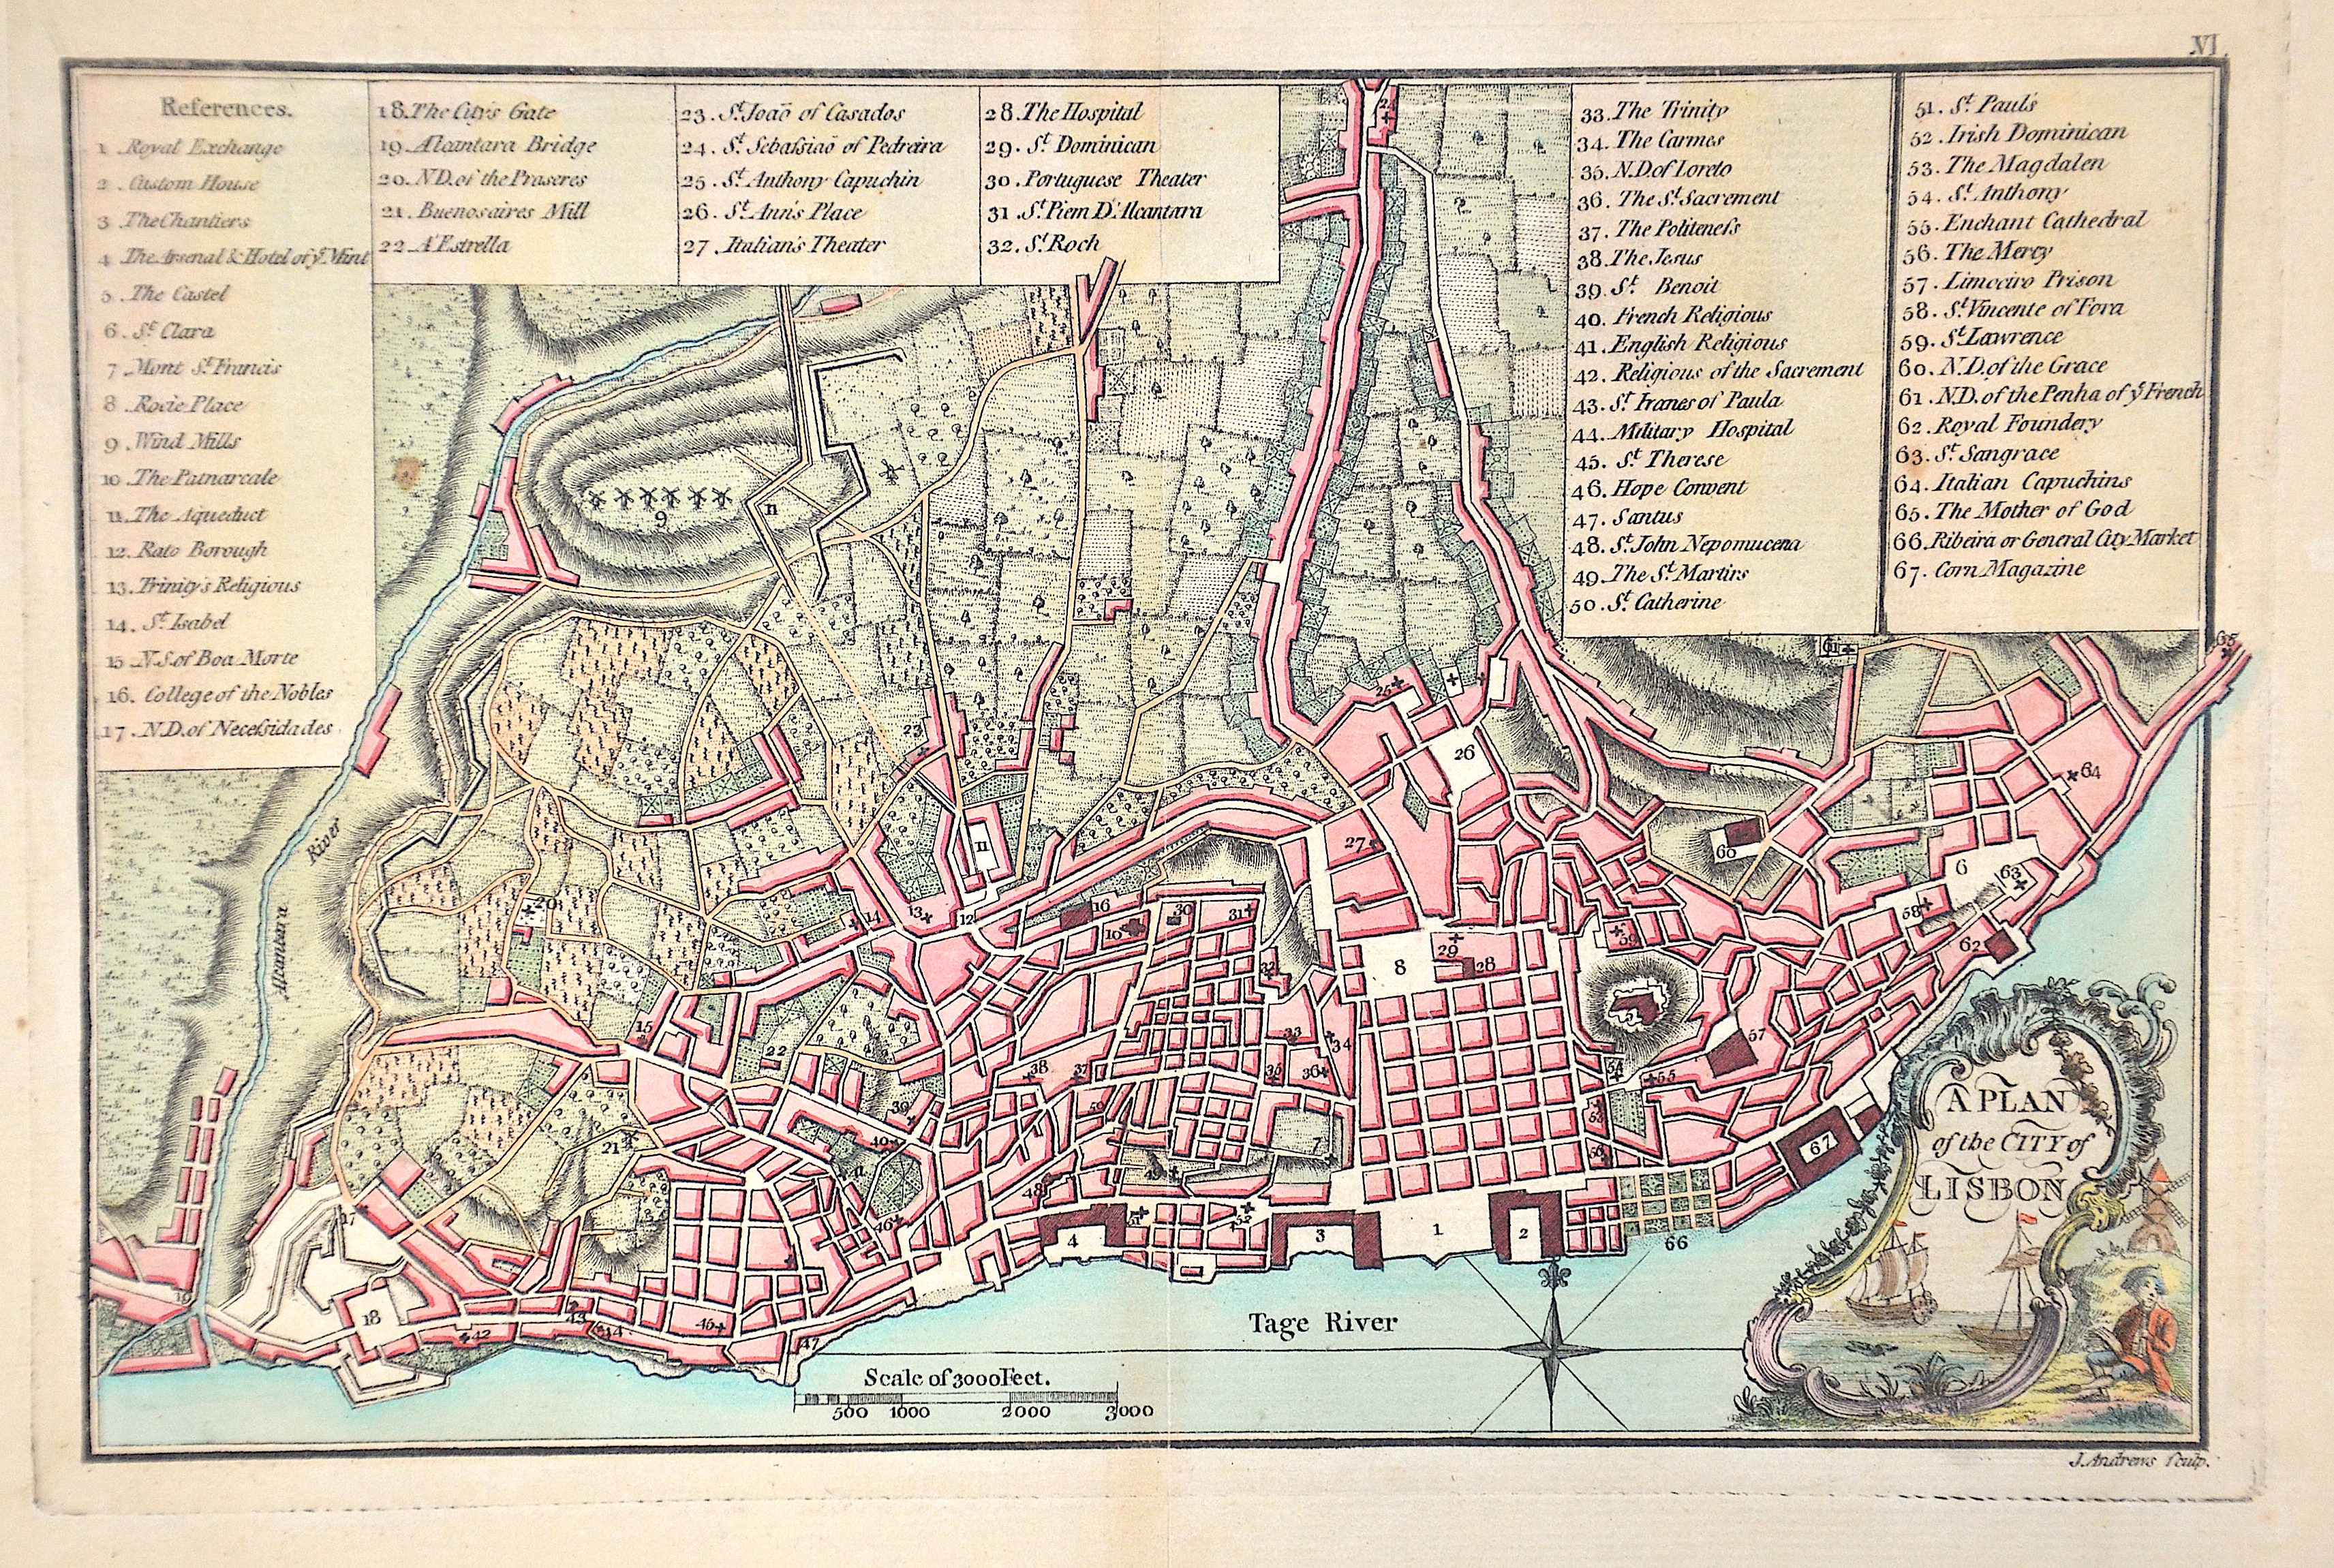 Andrews John A Plan of the City of Lisbon